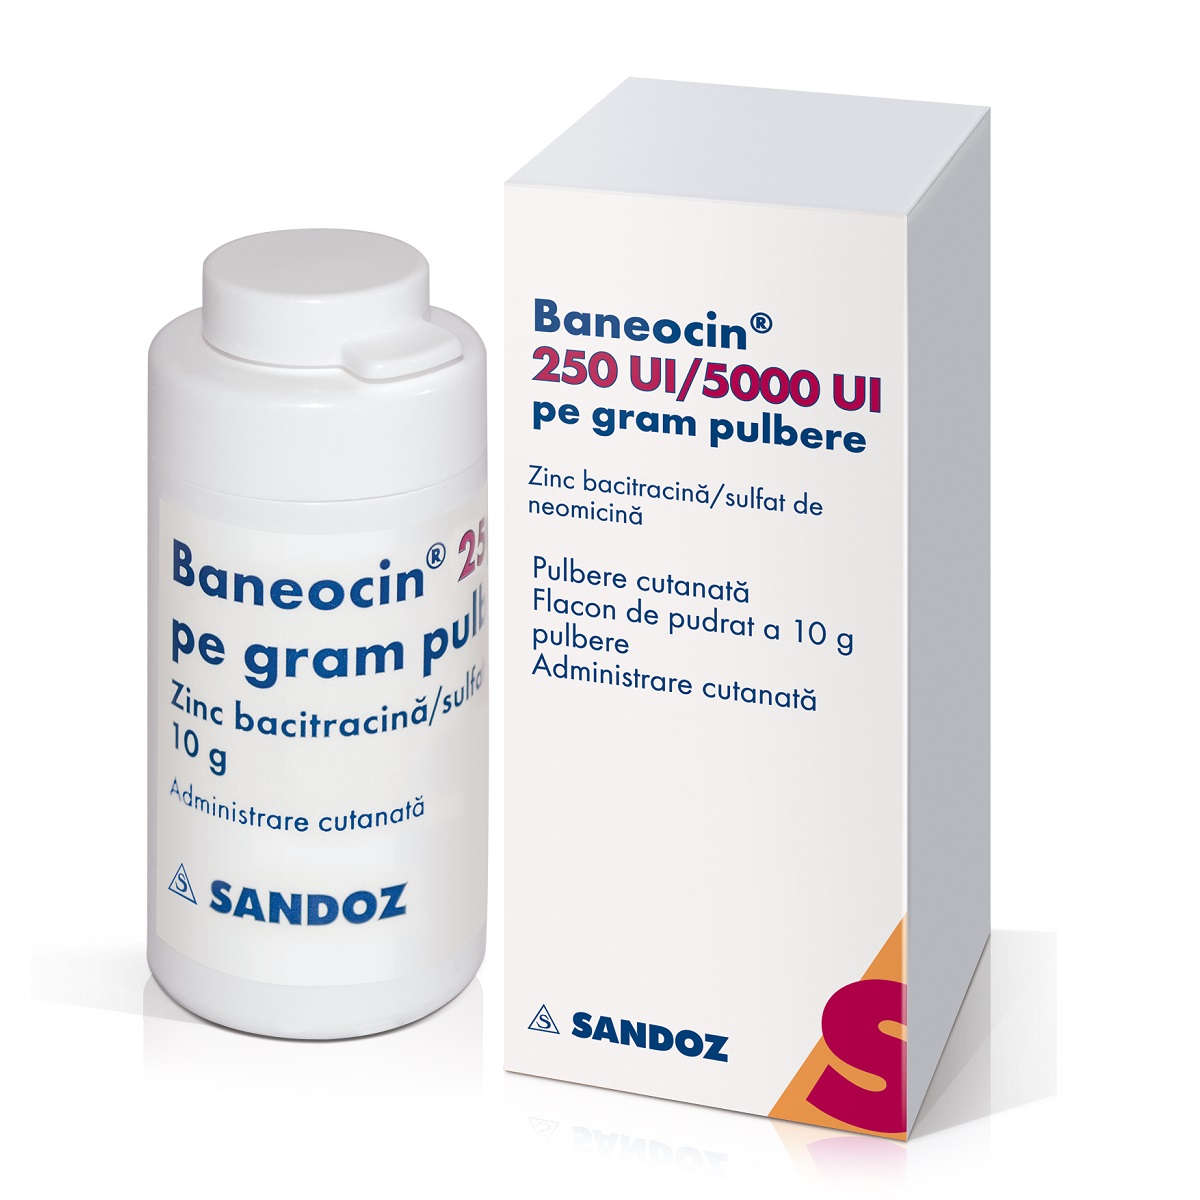 Baneocin pulbere 250UI/5000UI, 10 g, Sandoz